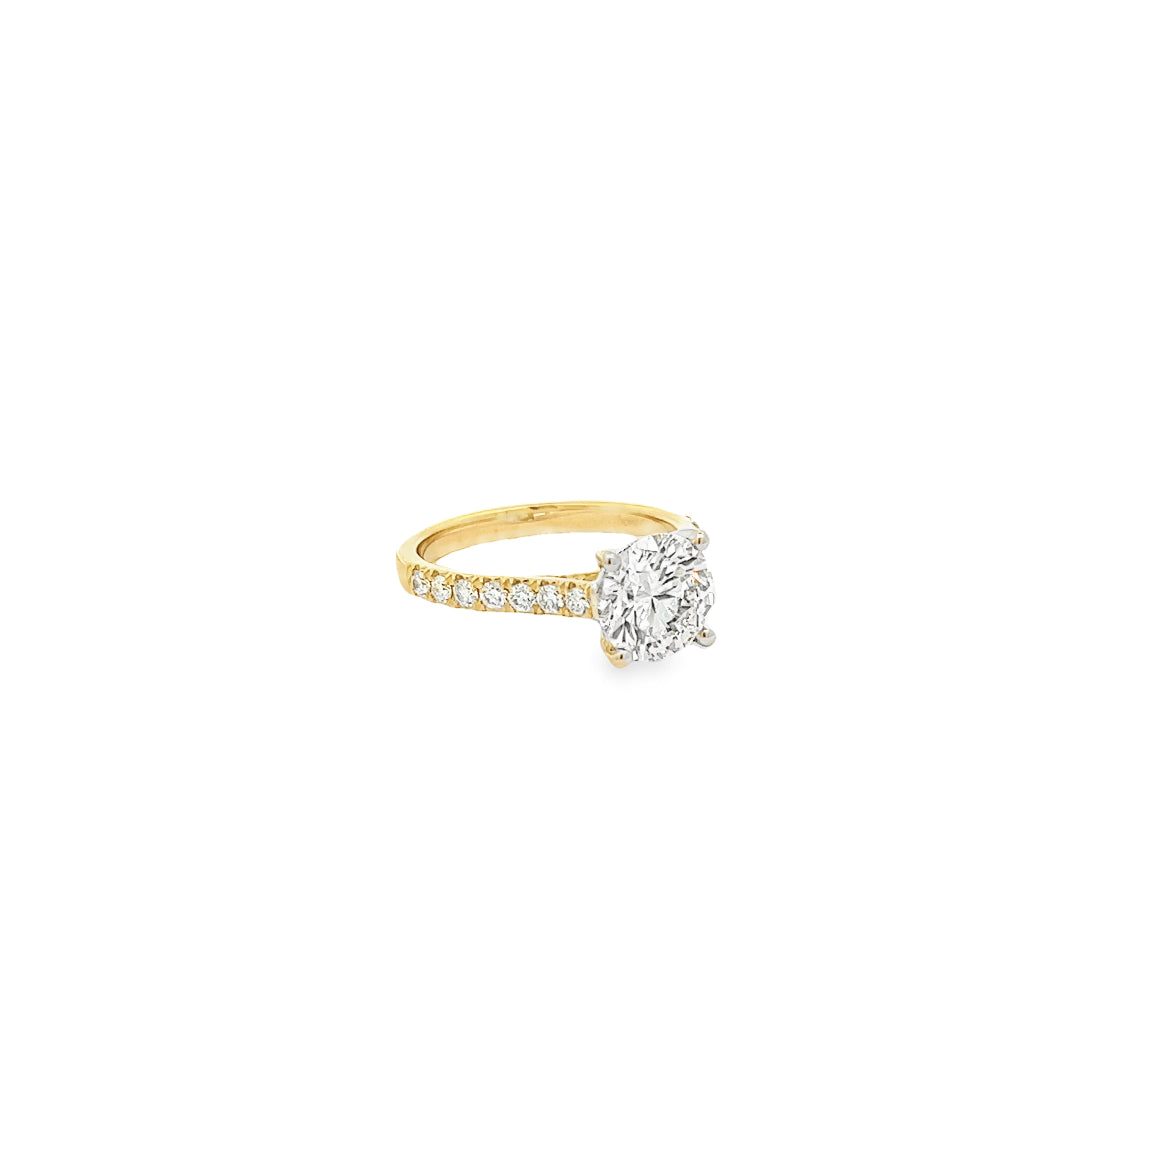 The Jewel 18K Yellow Gold Round Diamond Engagement Ring